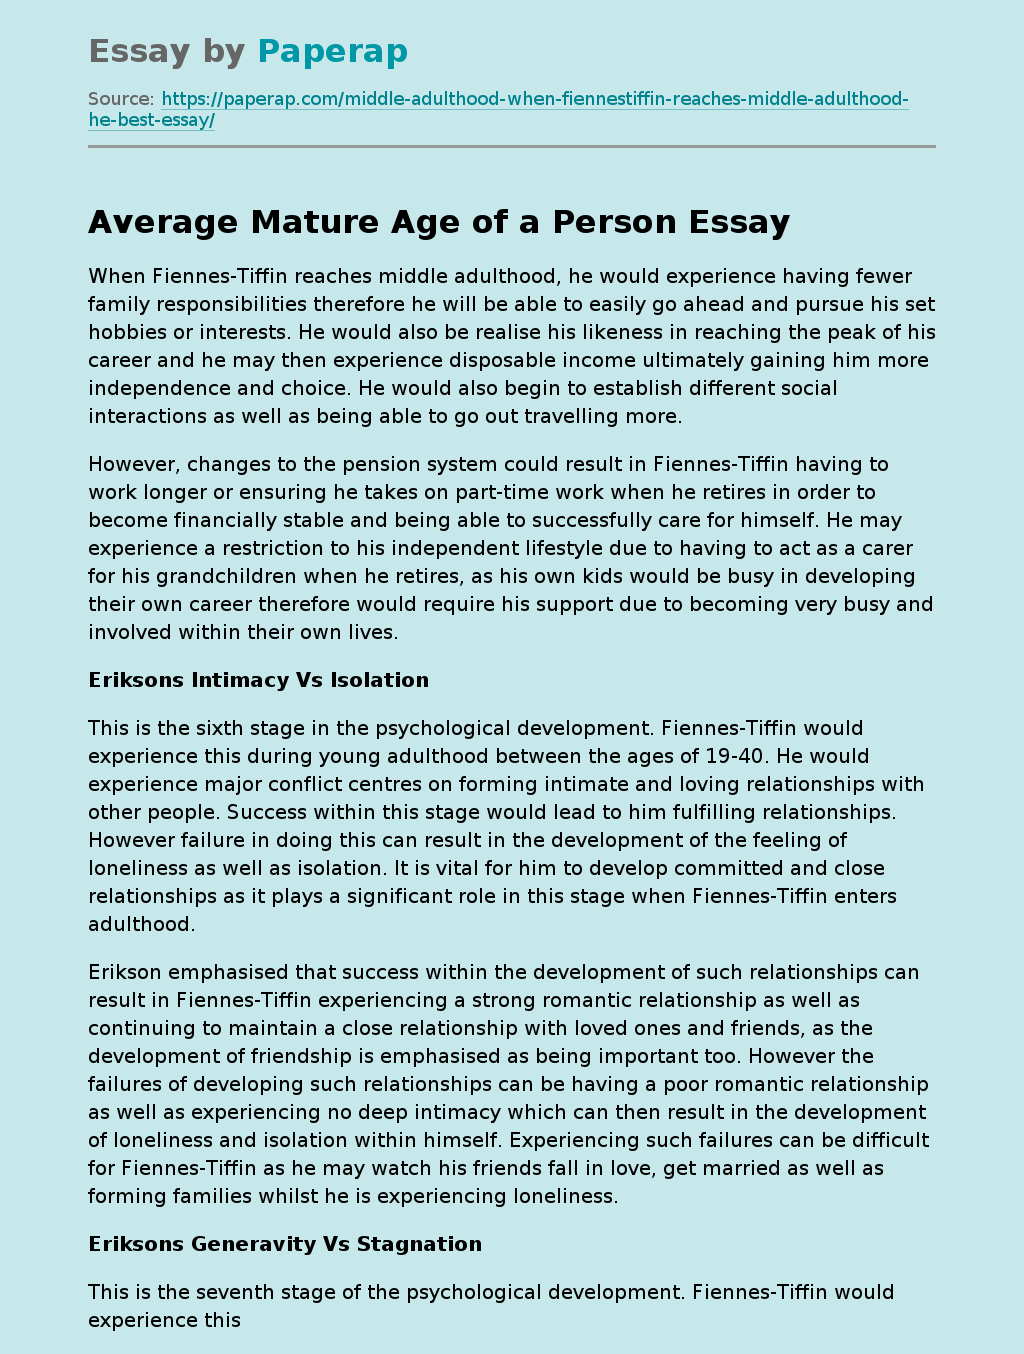 Average Mature Age of a Person